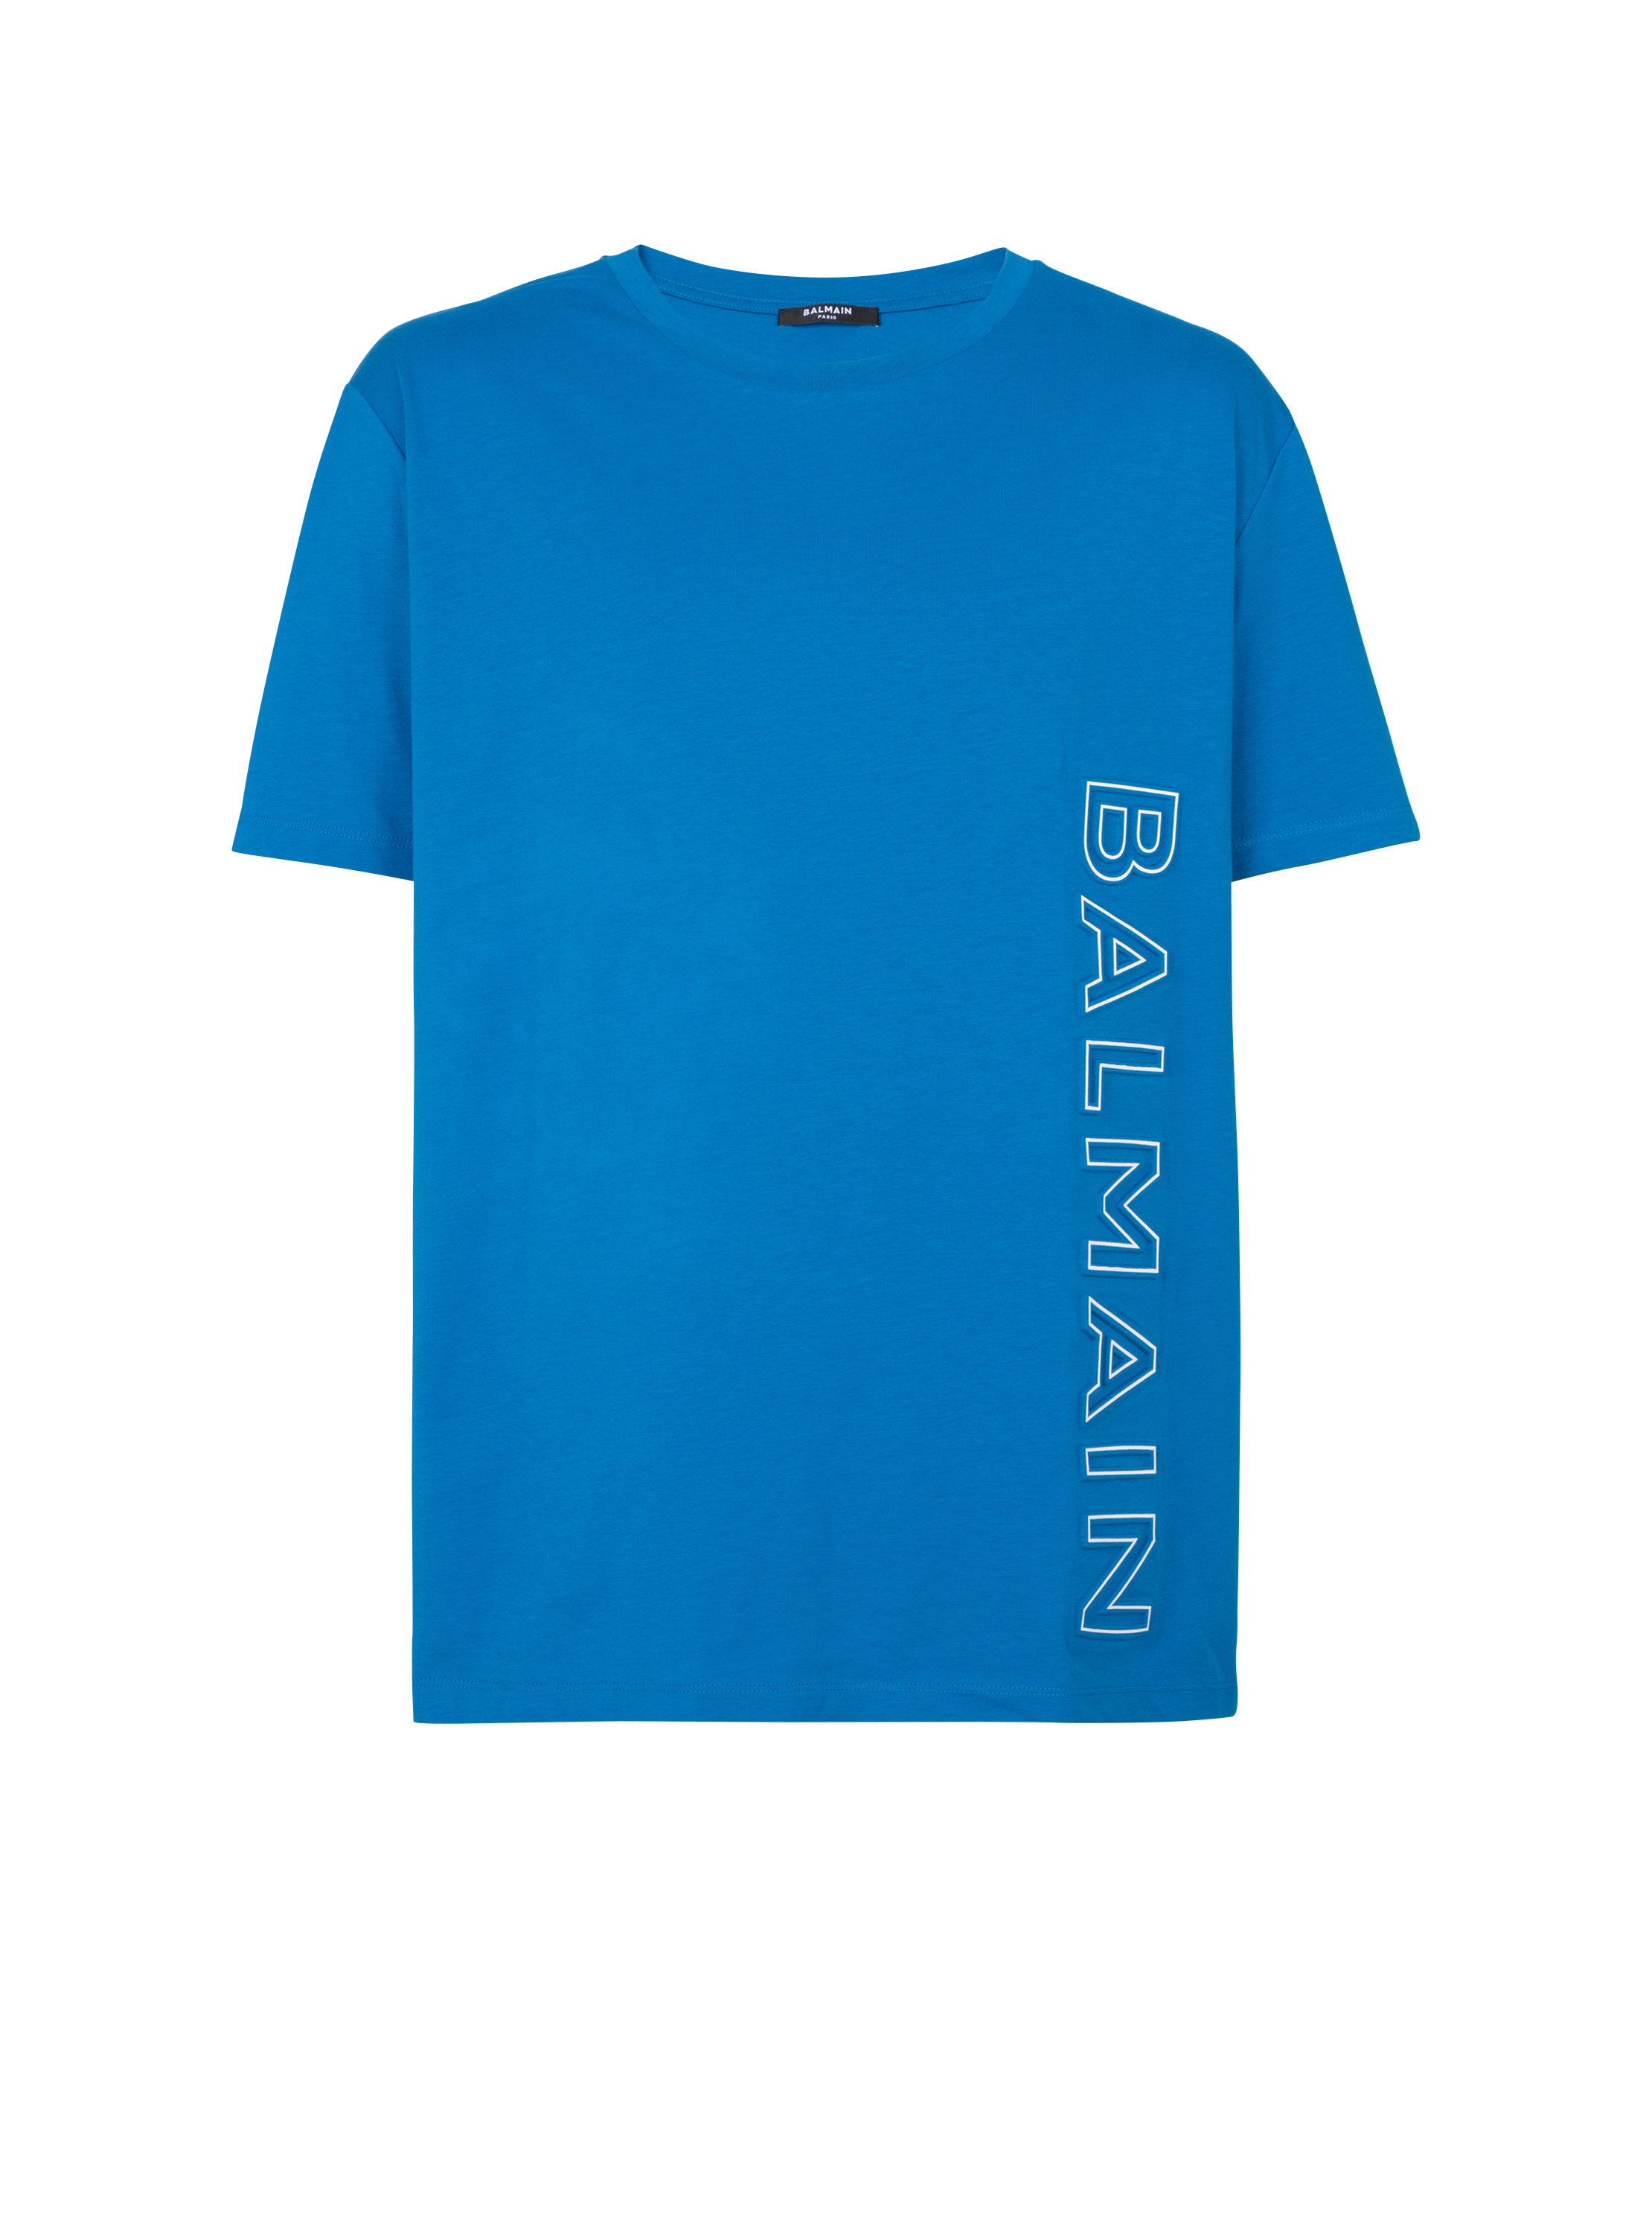 T-shirt Balmain embossé, bleu, hi-res